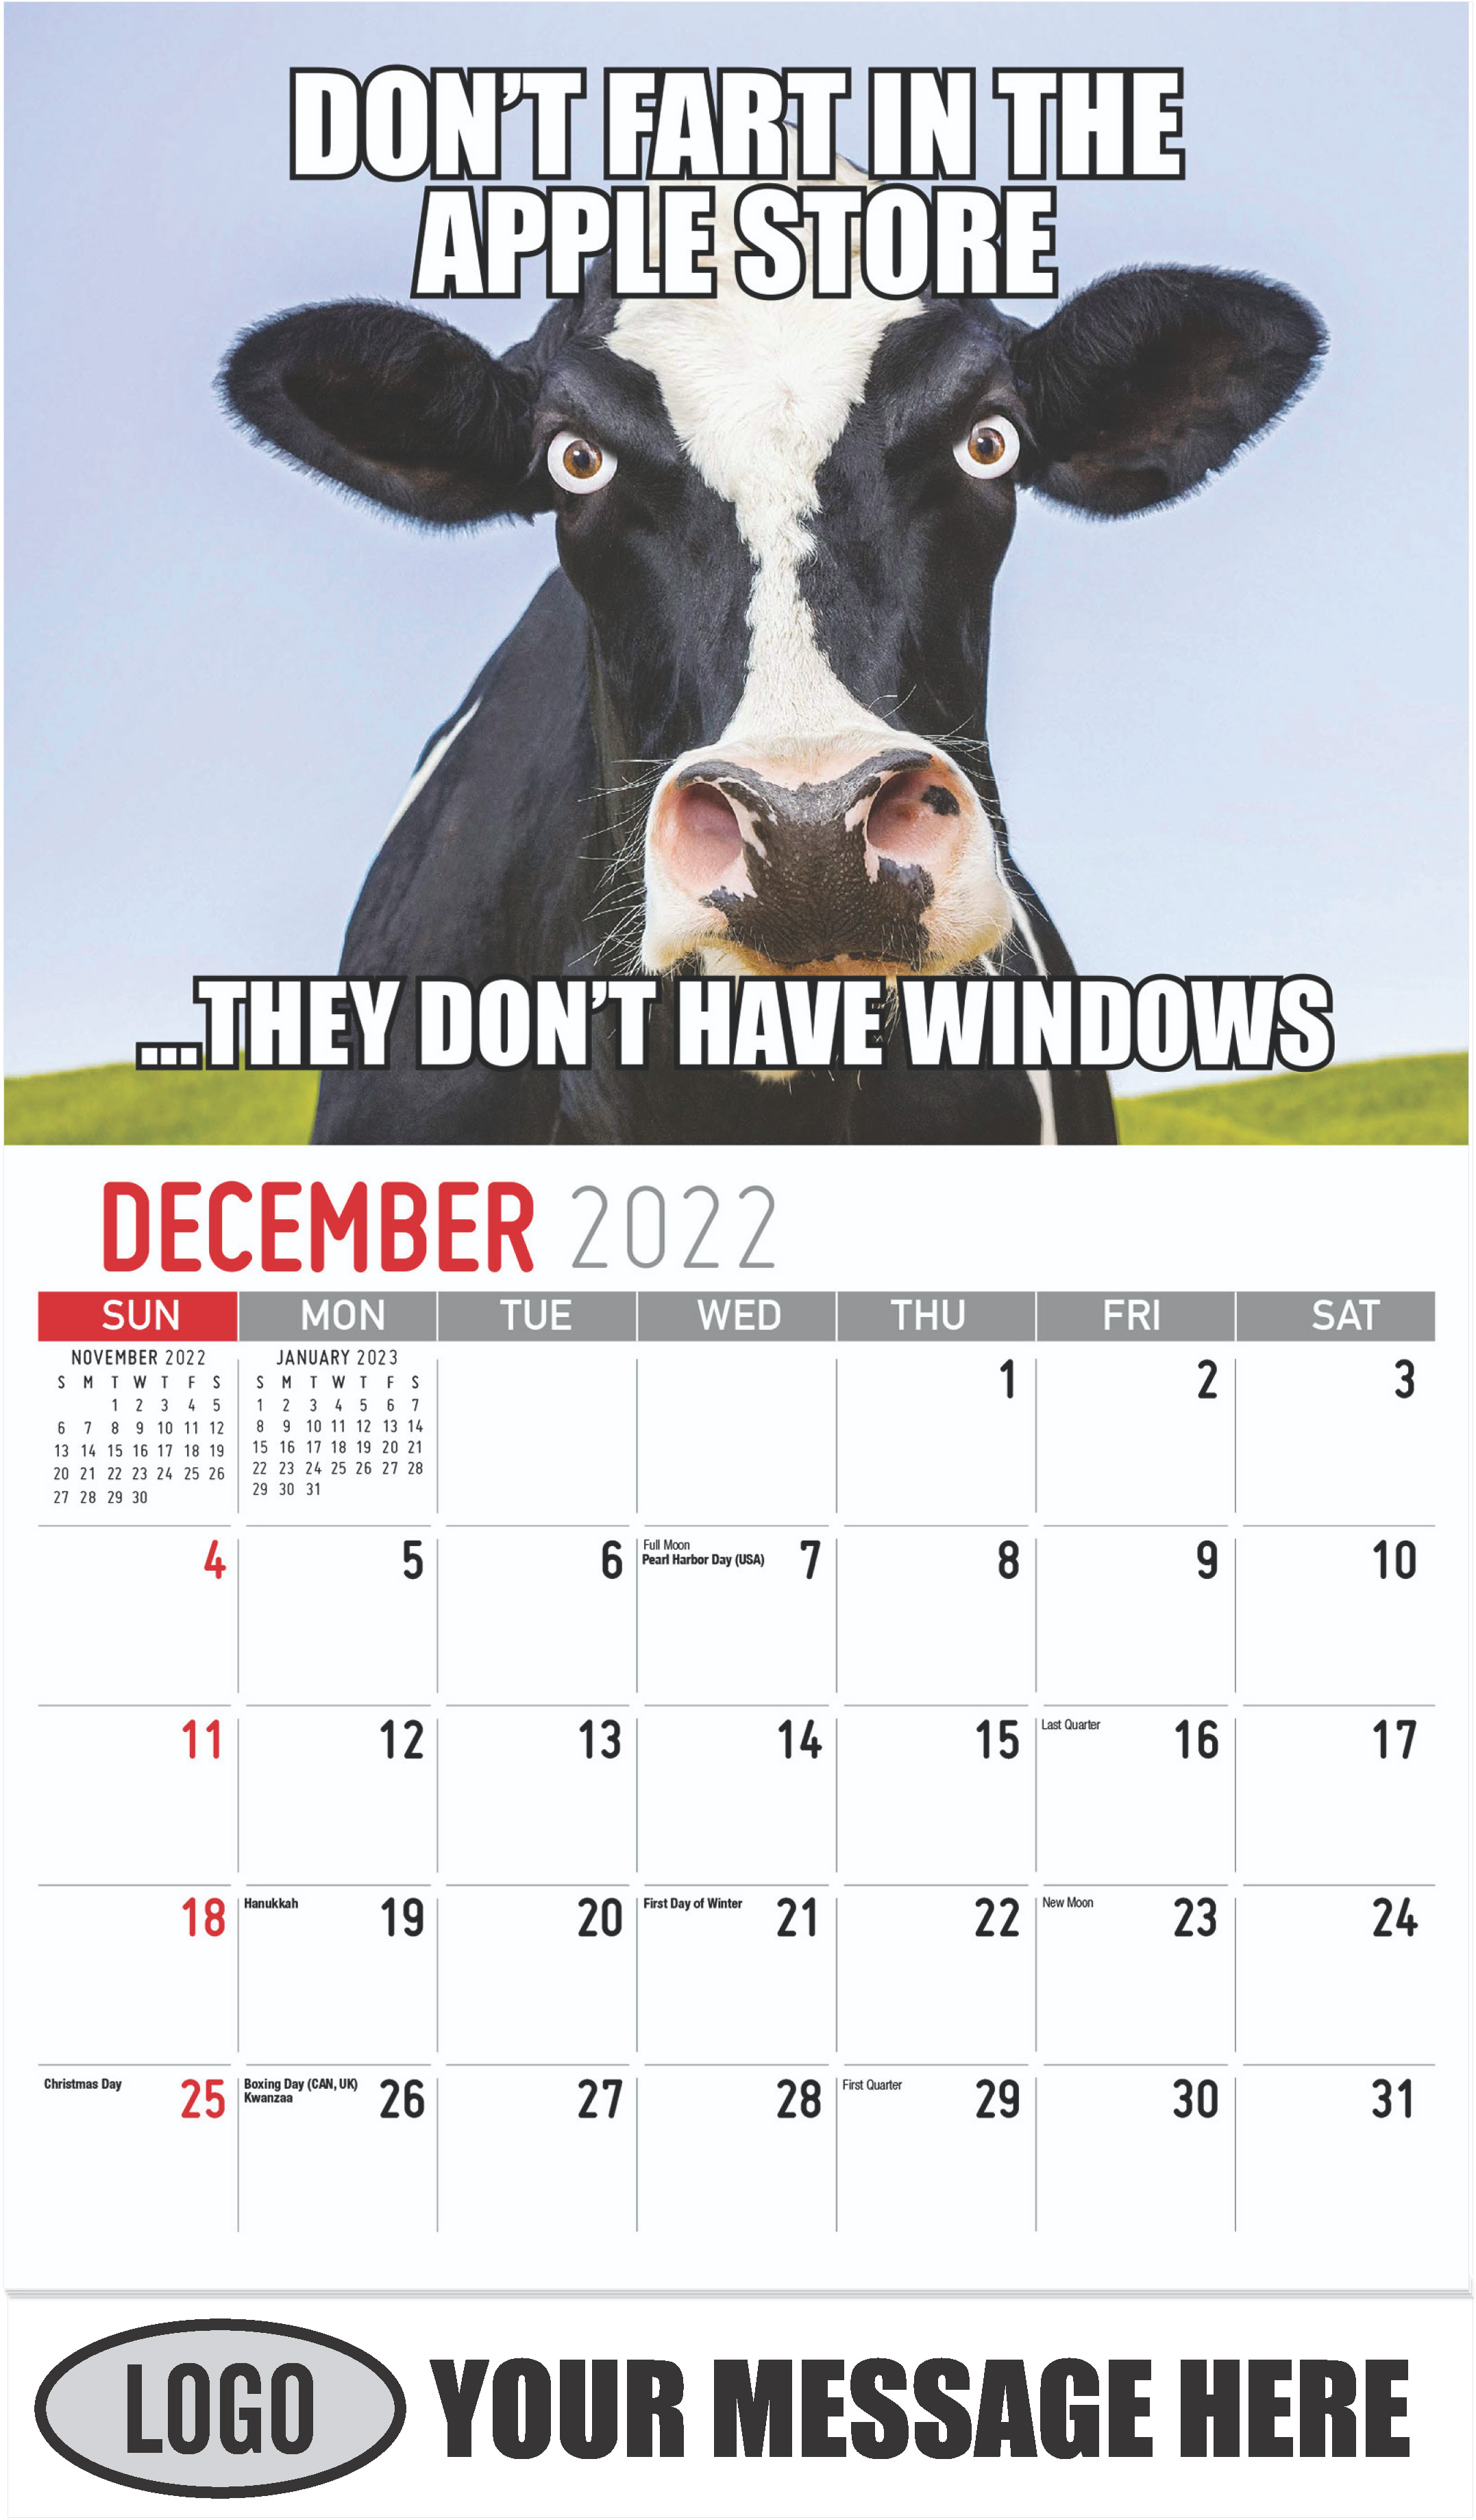 December 2022 - The Memeing of Life 2023 Promotional Calendar